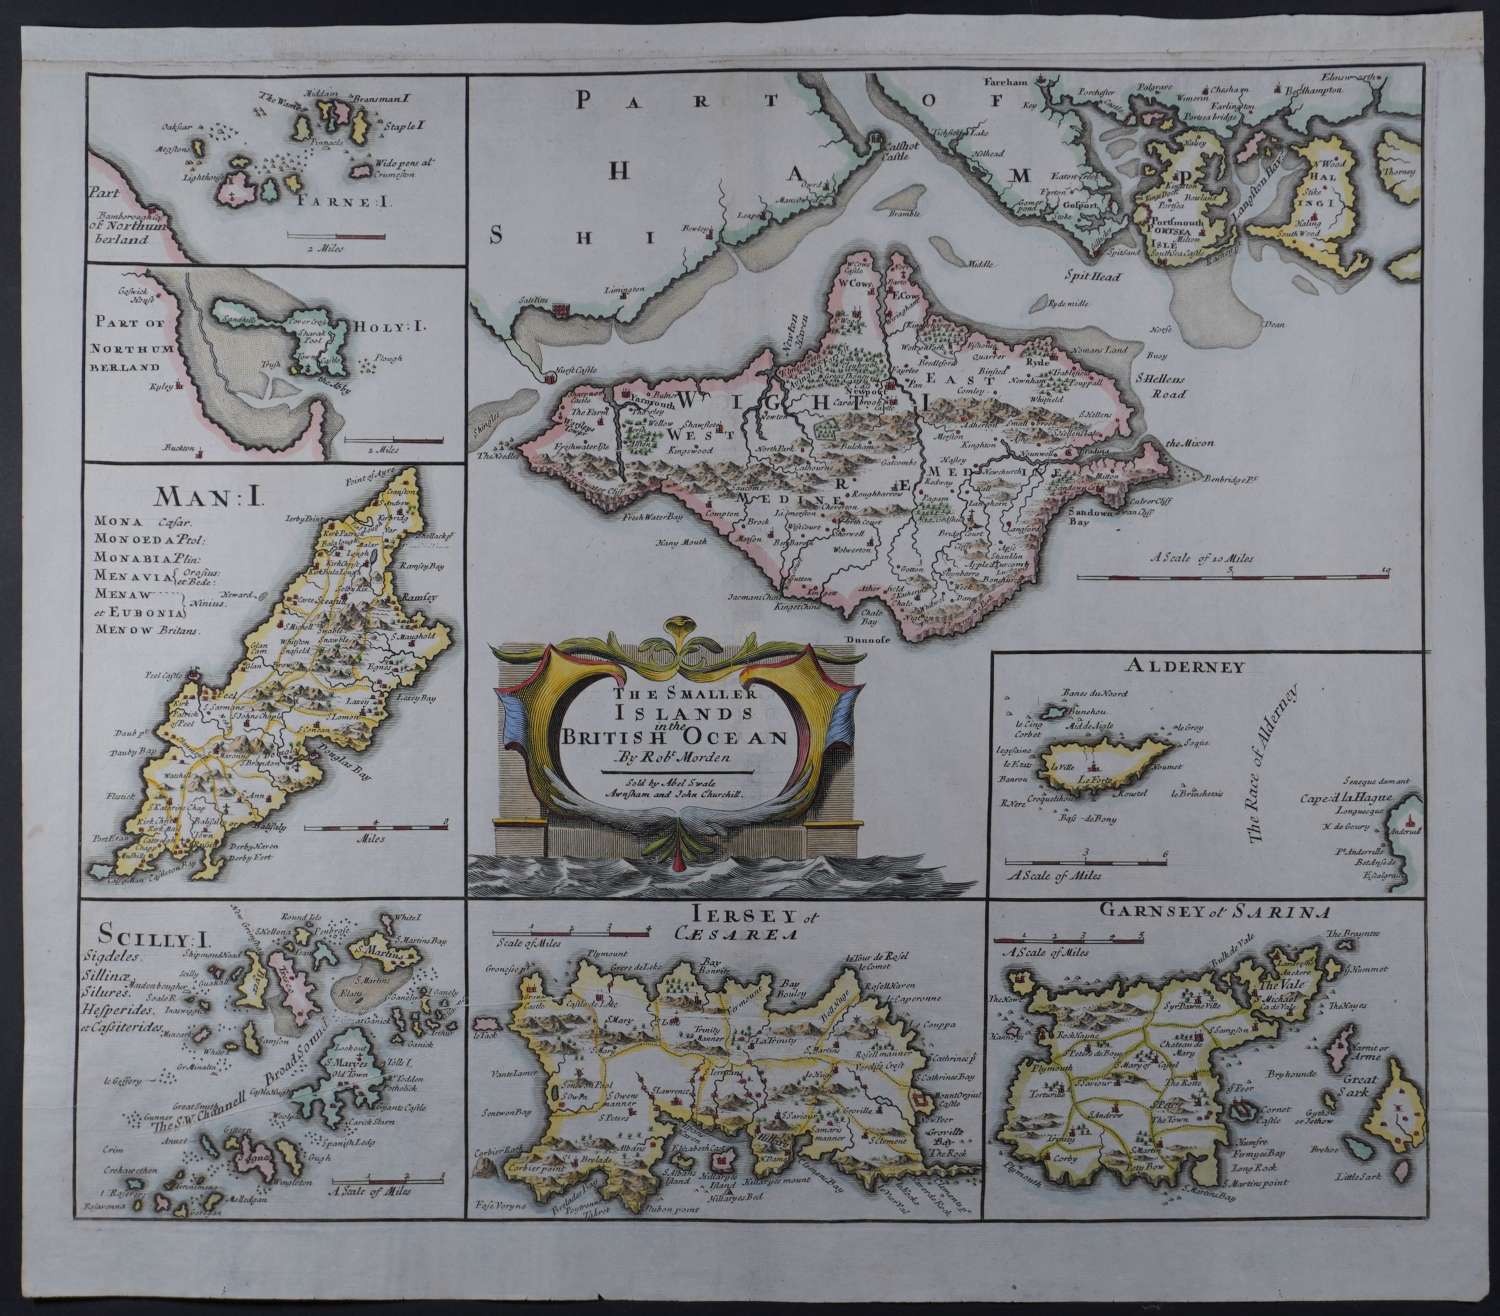 The Smaller Islands in the British Ocean. 1st Edition by Robert Morden